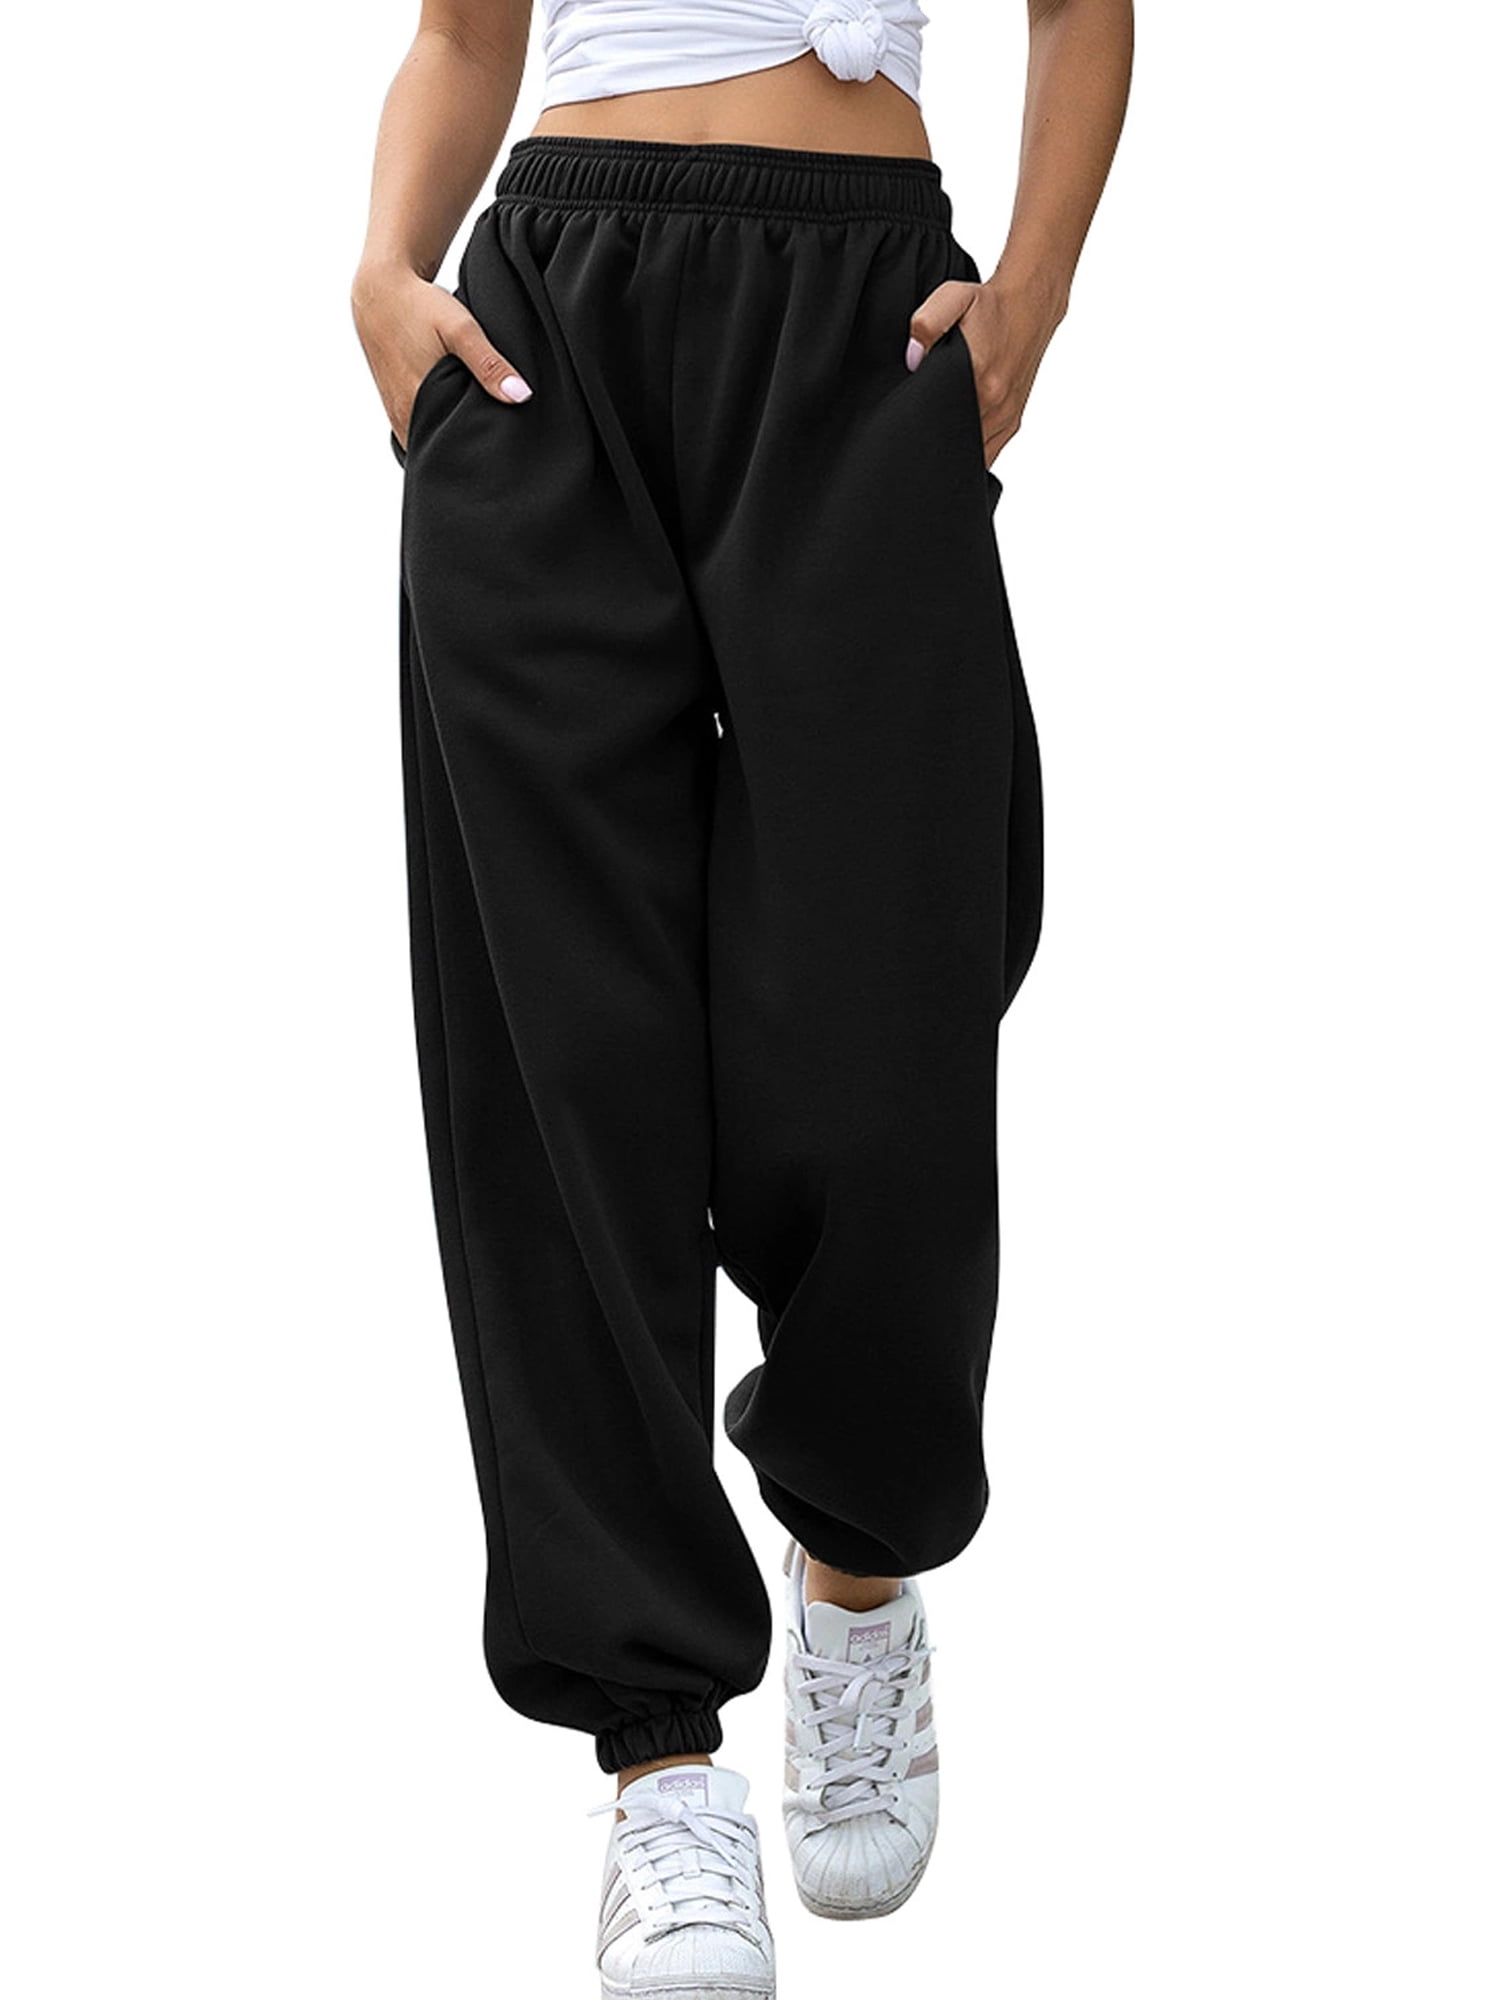 Xingqing Women Elastic High Waist Pockets Dance Jogger Sports Ladies Casual  Cotton Baggy Sweatpants Trousers Black 